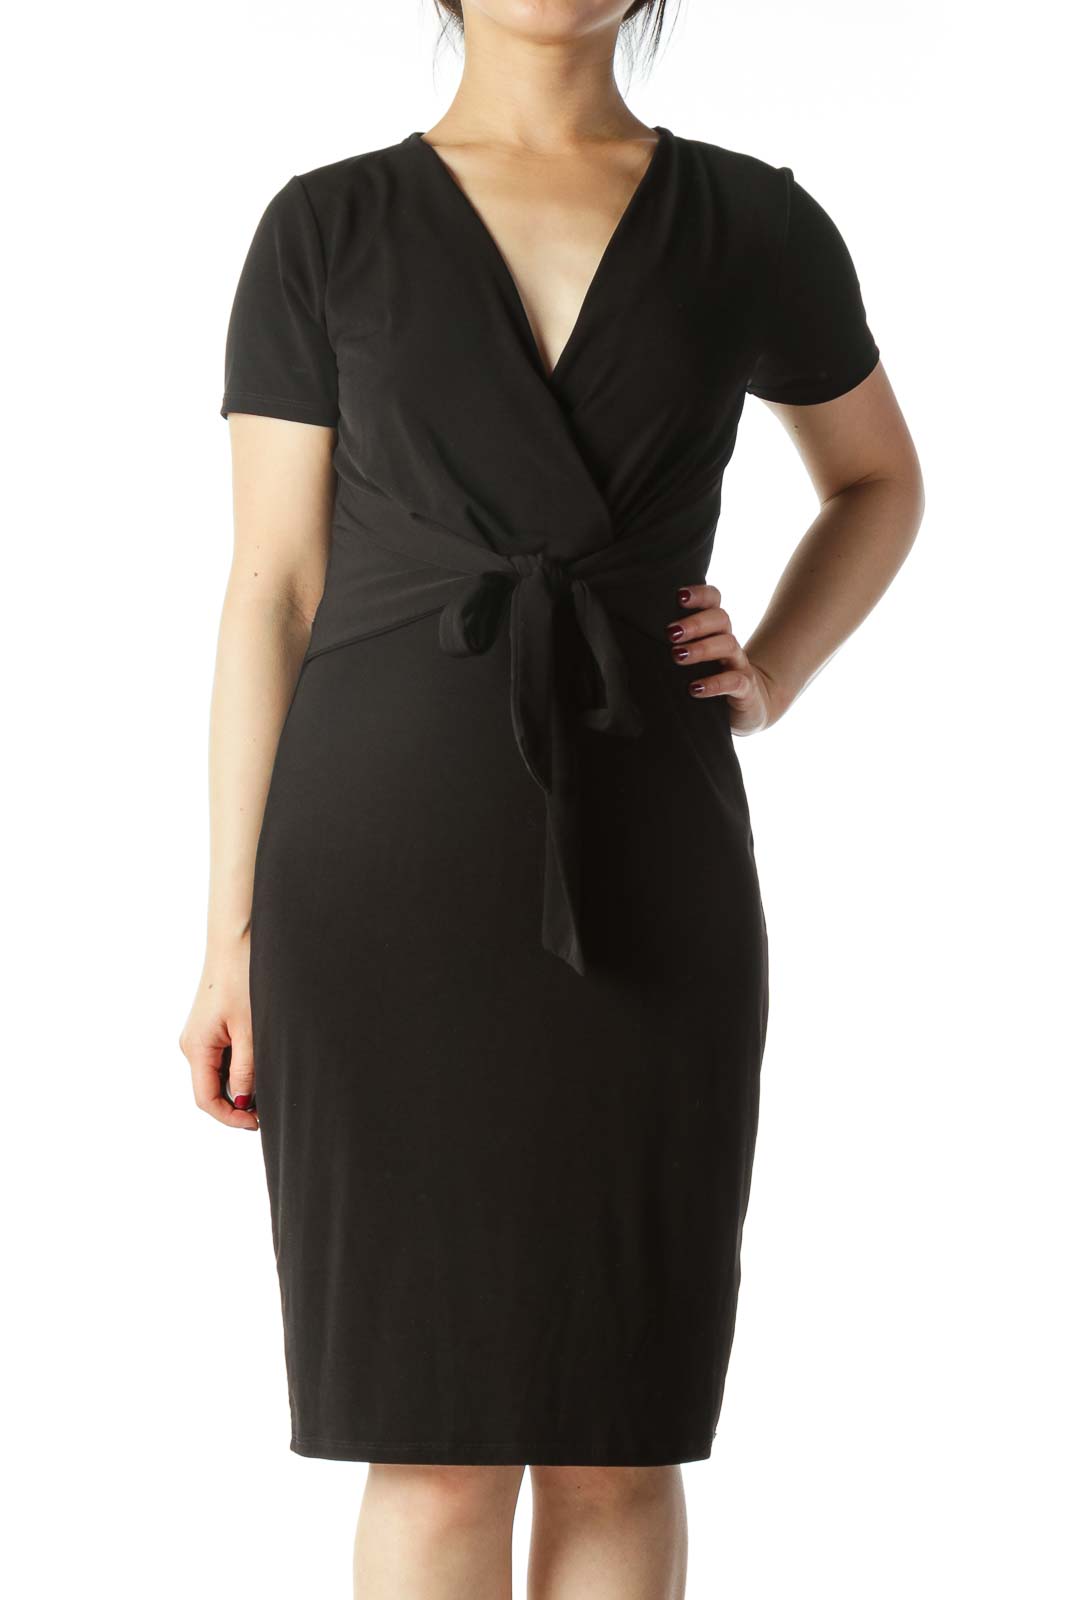 Tahari - Black Wrap Evening Dress Polyester Elastane | SilkRoll